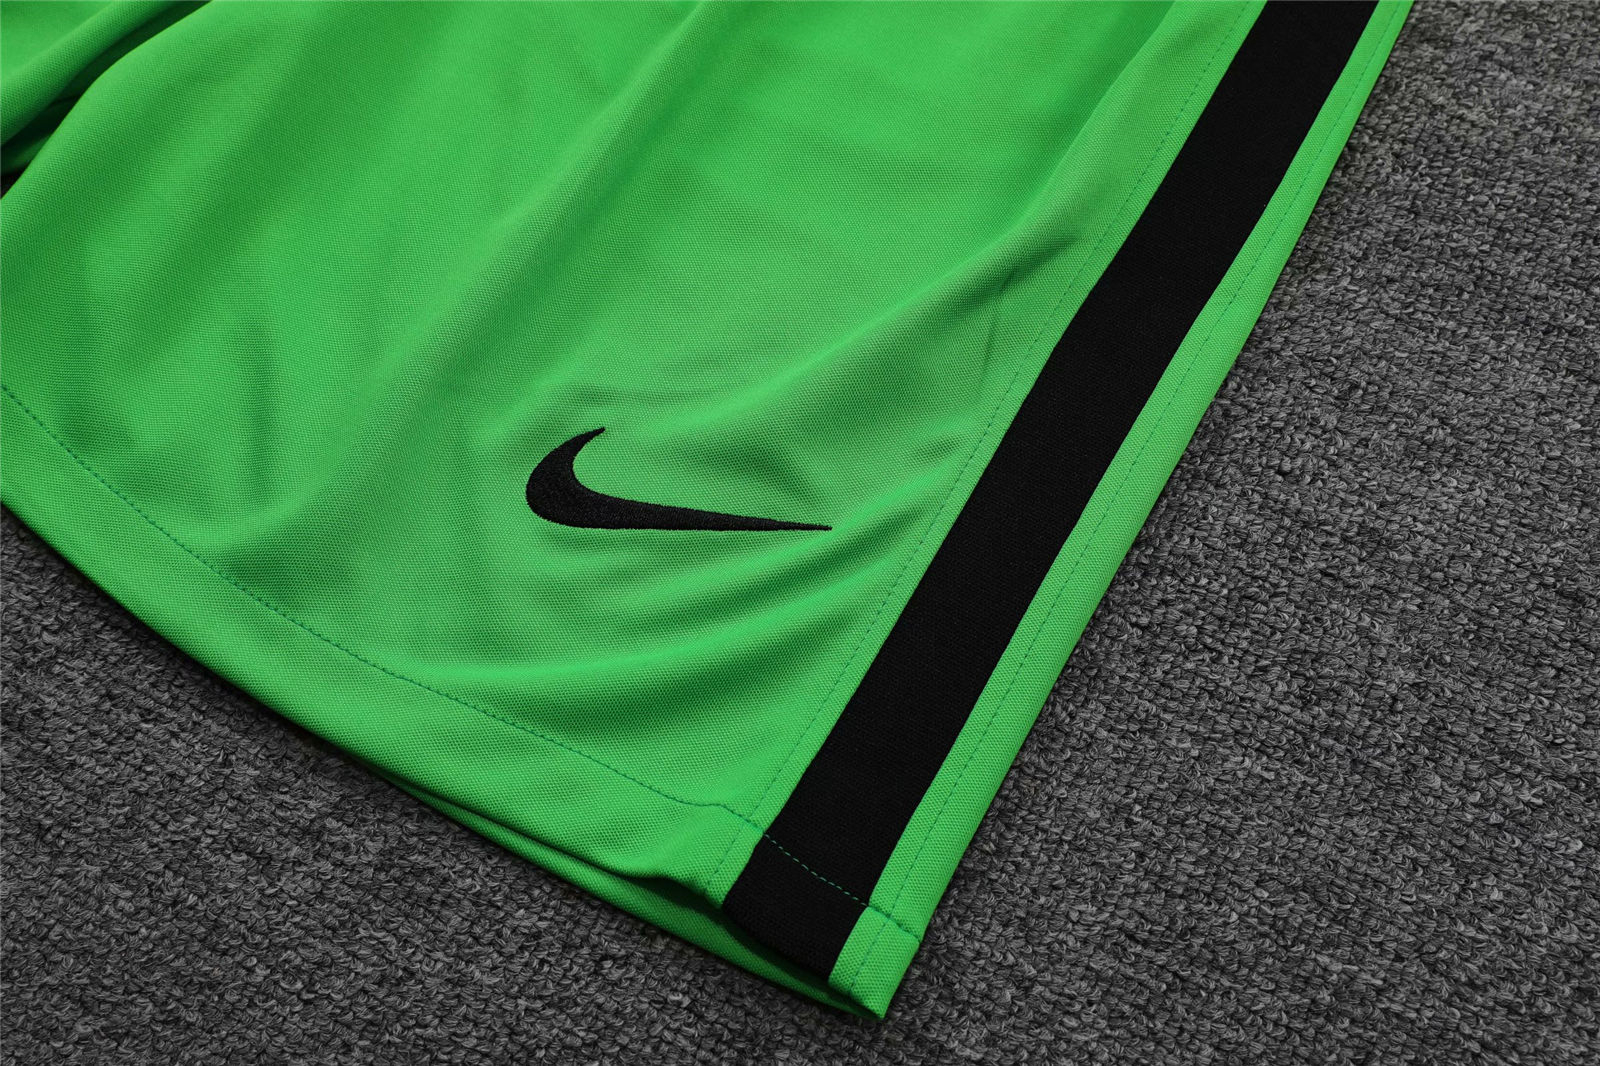 France Soccer Jersey + Short Replica Goalkeeper Green Long Sleeve Mens 2021/22